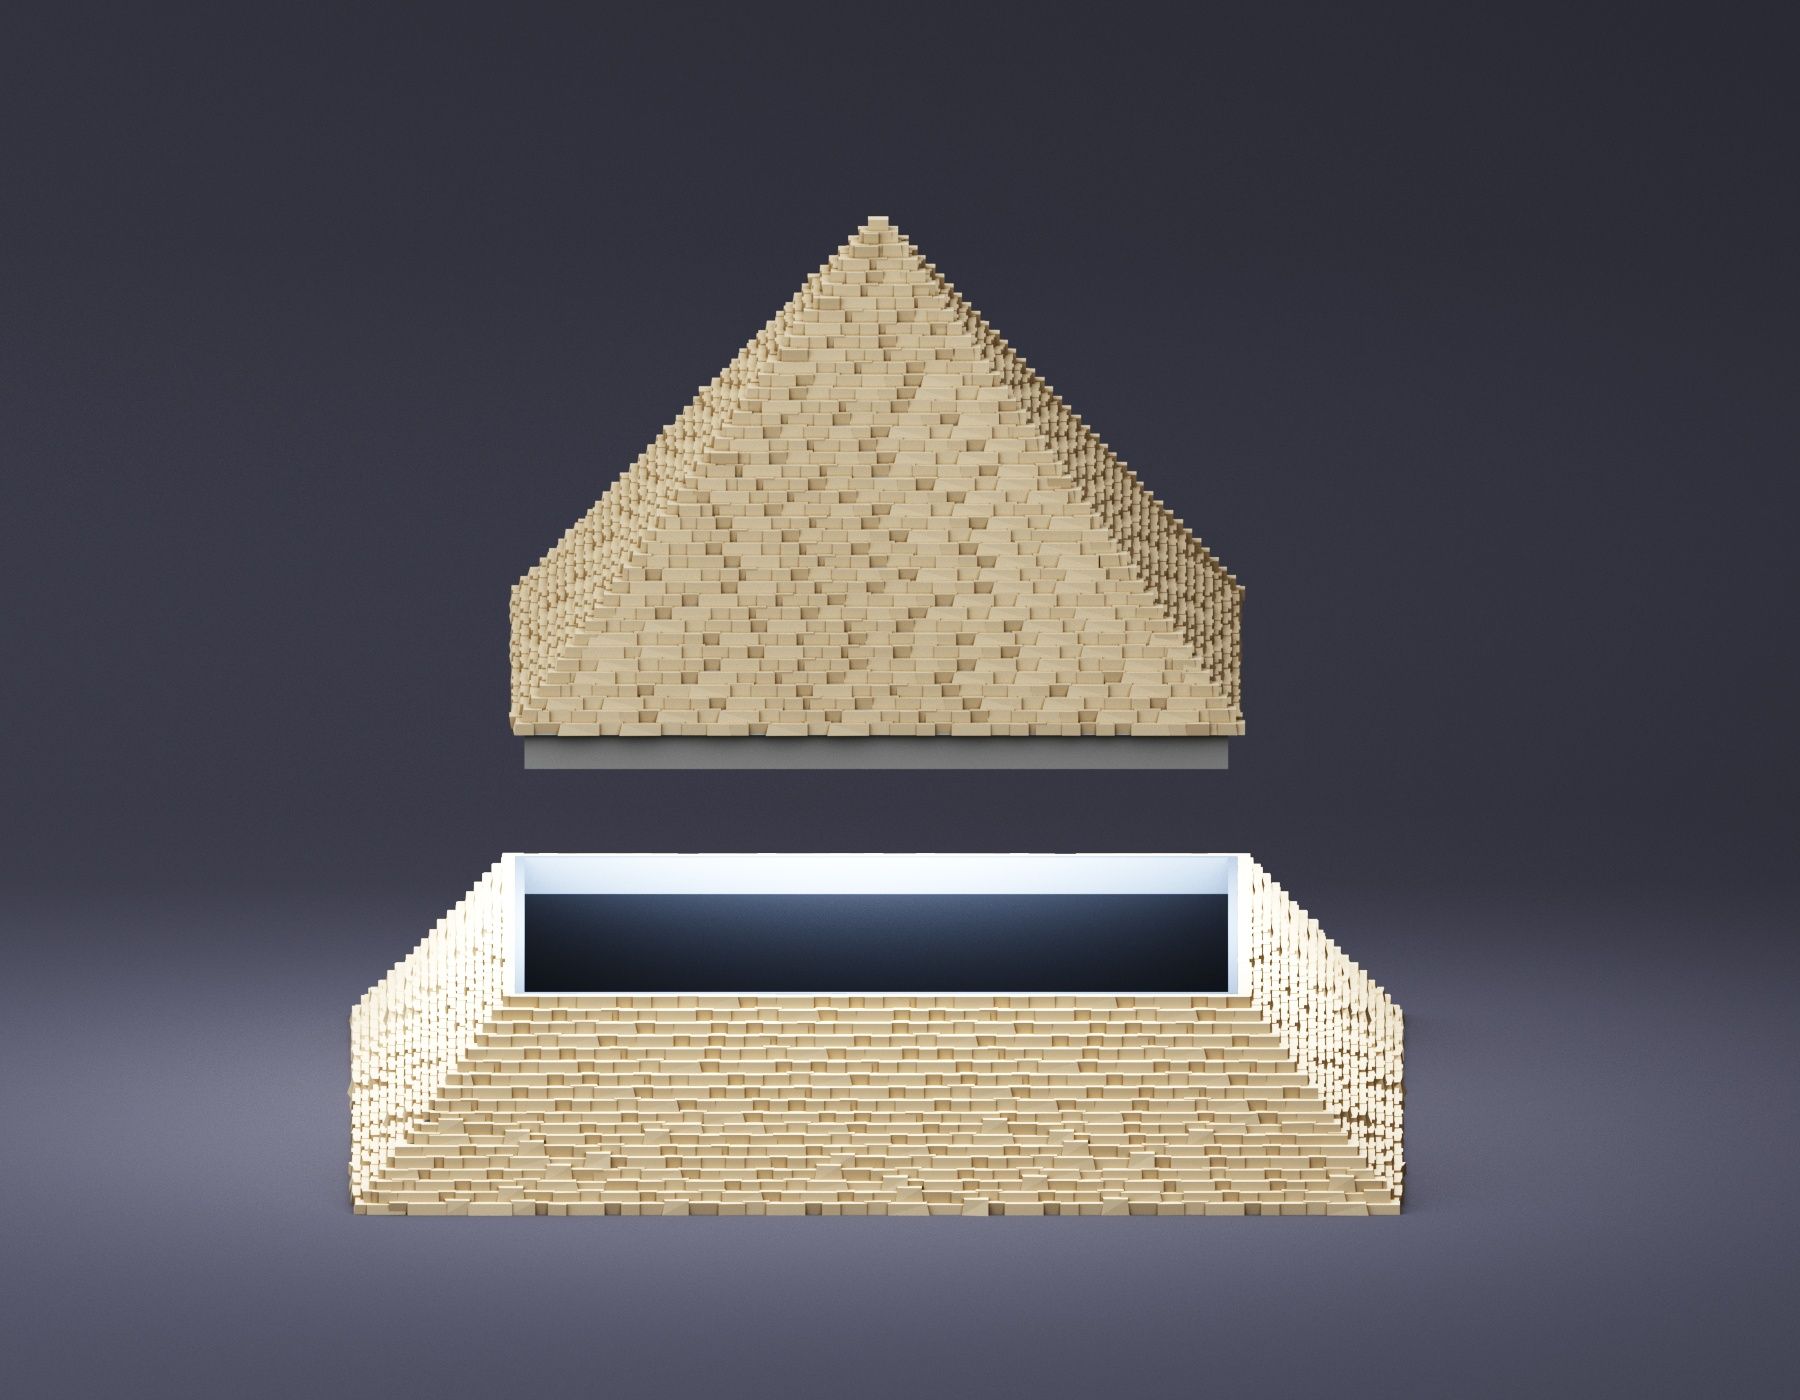 Pyramid-of-Giza-JPG2.jpg Download STL file The Great Pyramid of Giza • 3D printable object, Giordano_Bruno